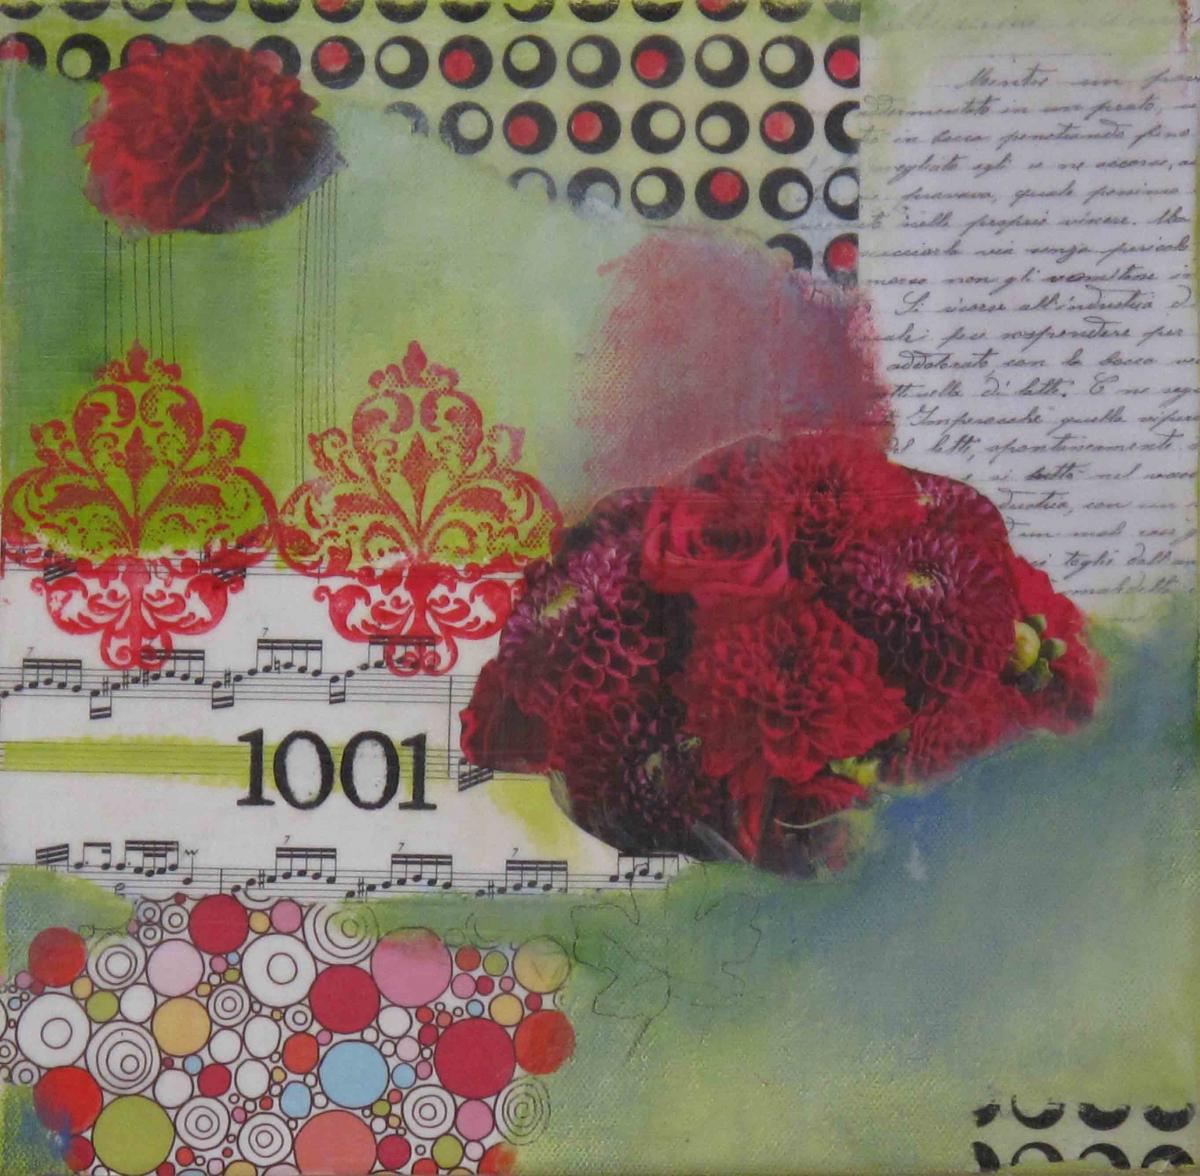 Florales III, 2013, Acryl, Collage, Wachs auf Leinwand, 30 x 30 cm